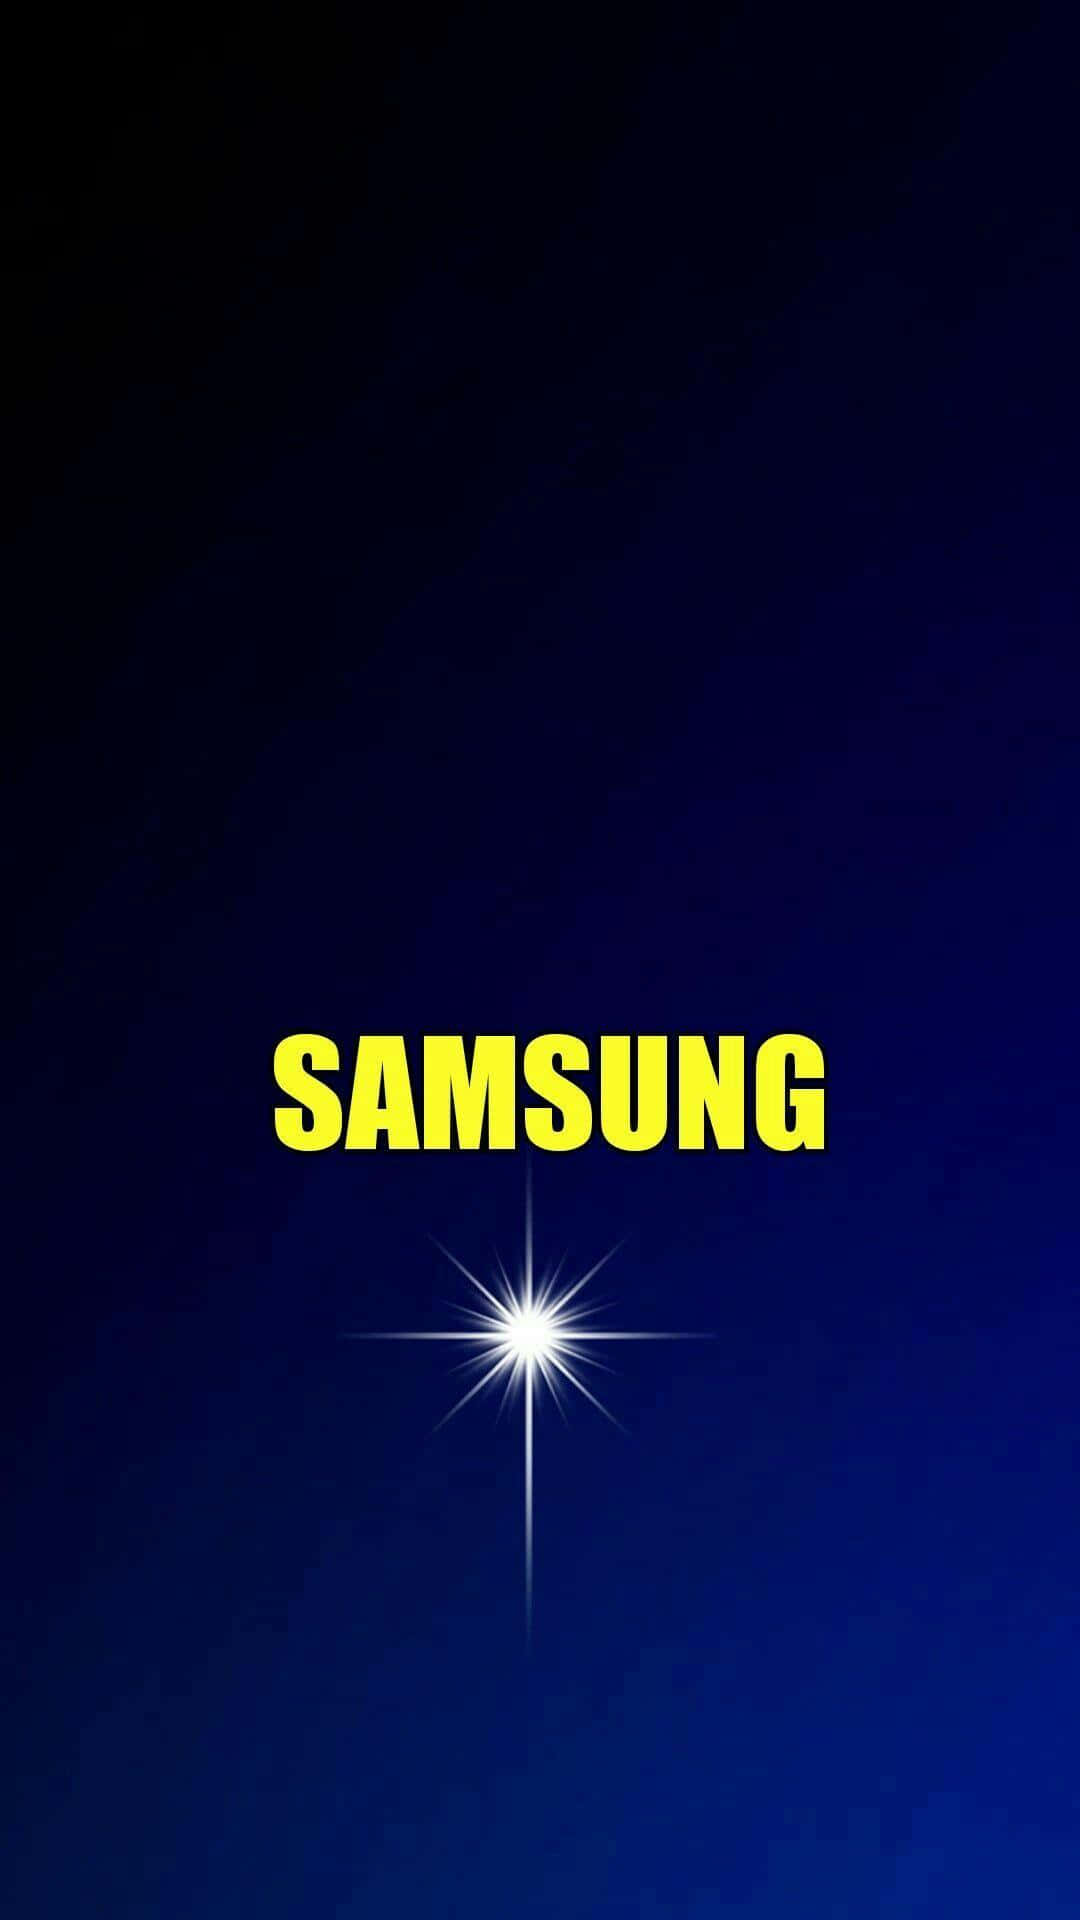 Download Galaxy m30 Theme for Samsung galaxy m30 Free for Android - Galaxy  m30 Theme for Samsung galaxy m30 APK Download - STEPrimo.com